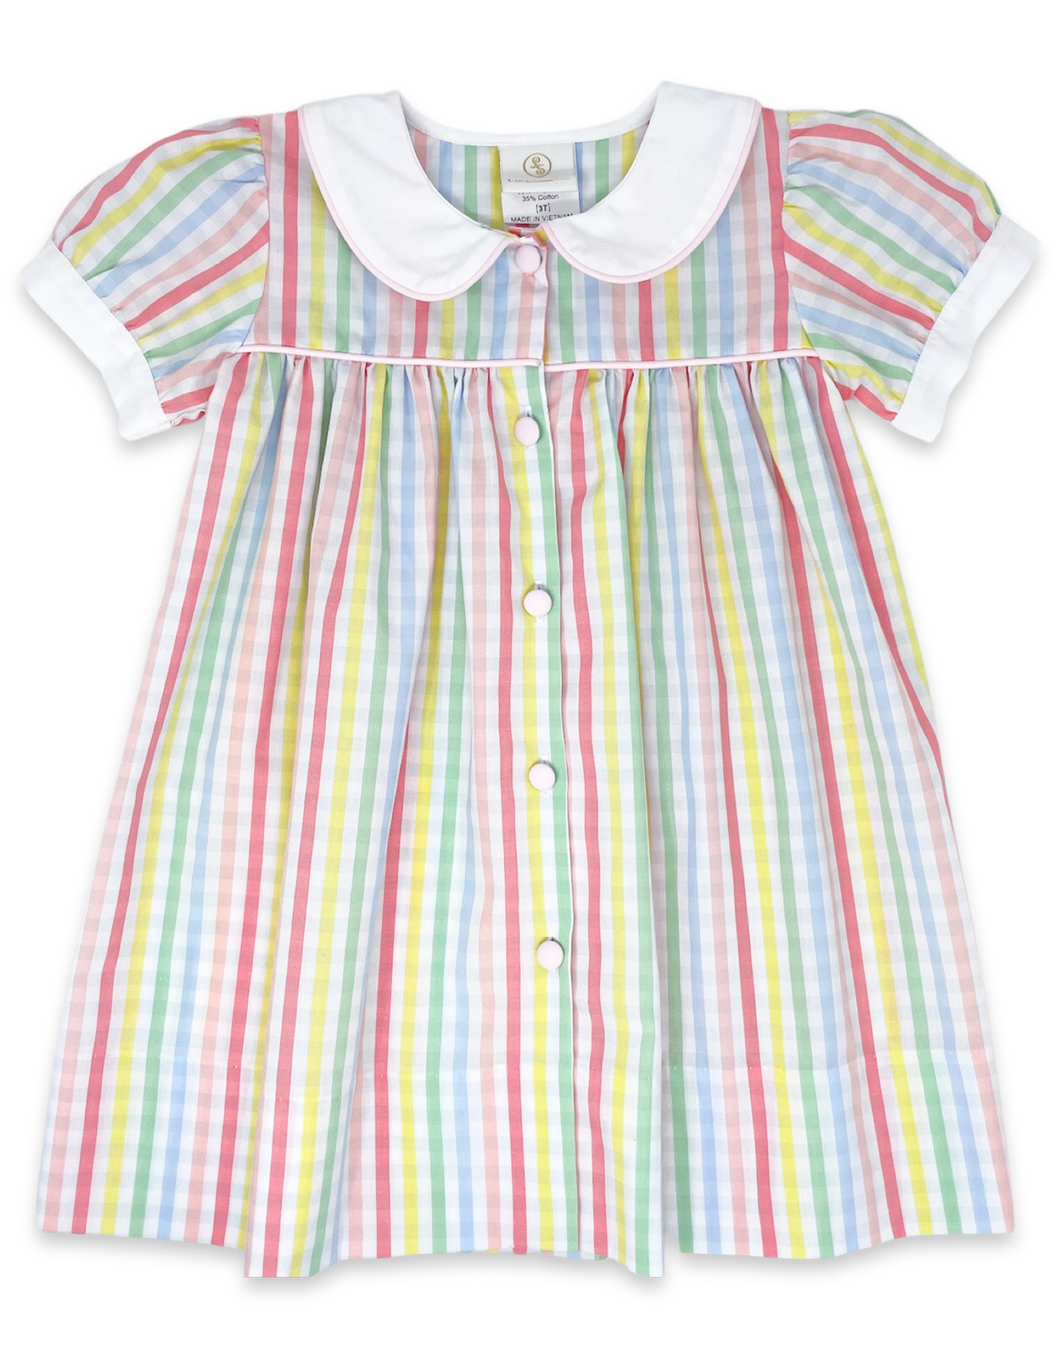 Breccan Dress-Rainbow Stripe